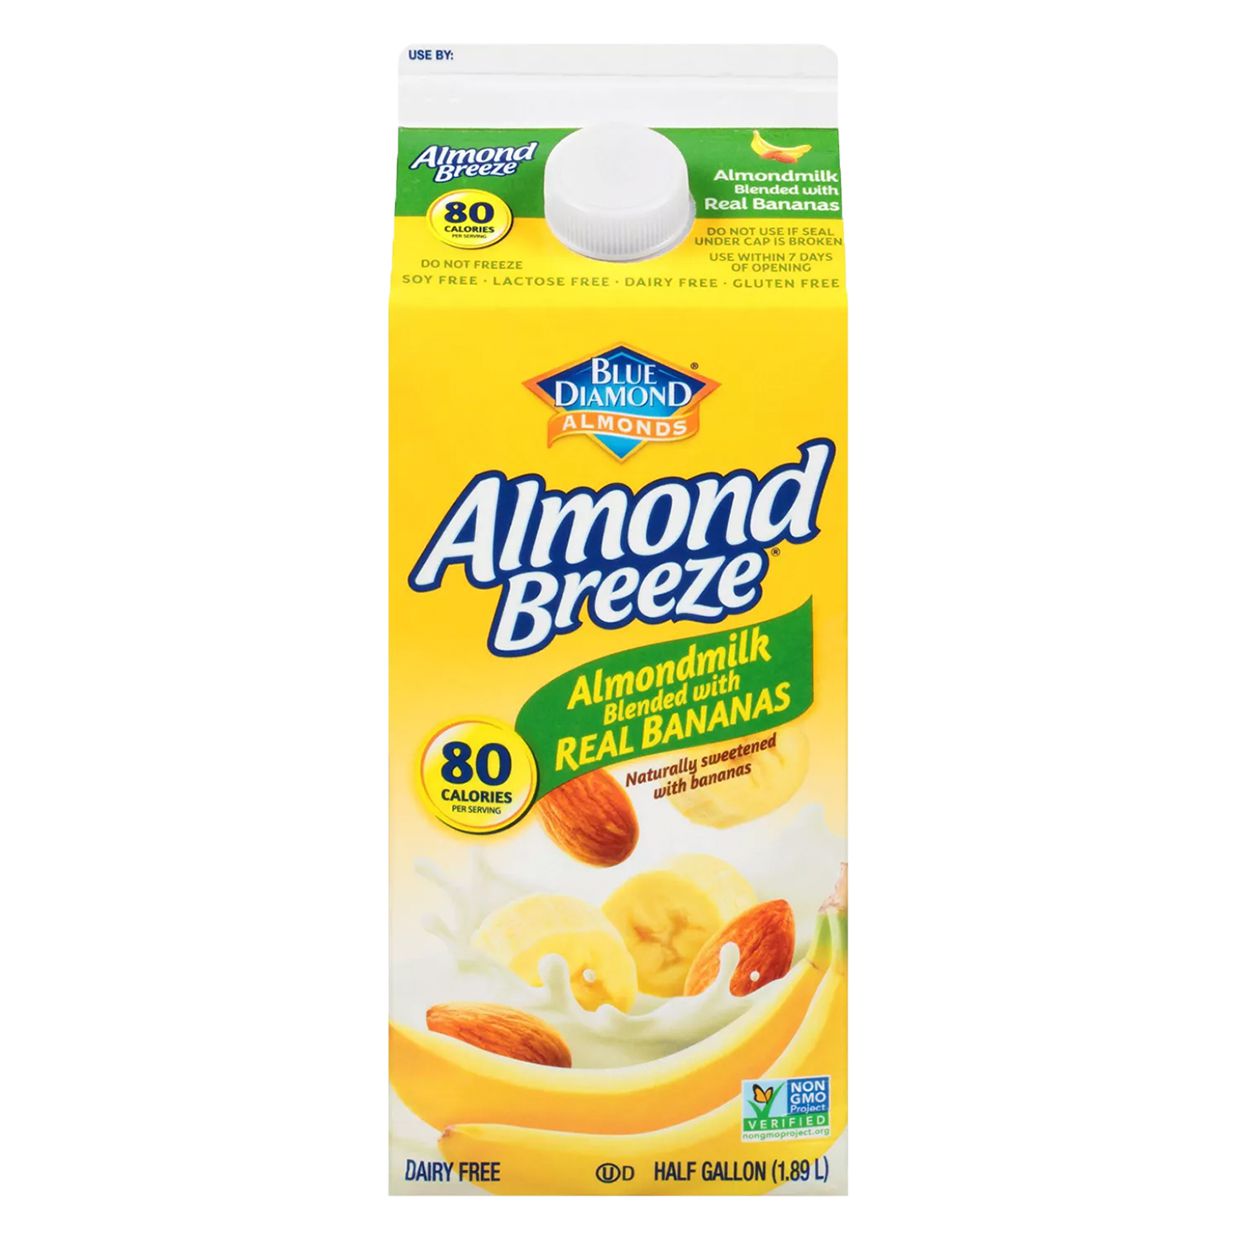 Almond Breeze Almondmilk blended with bananas